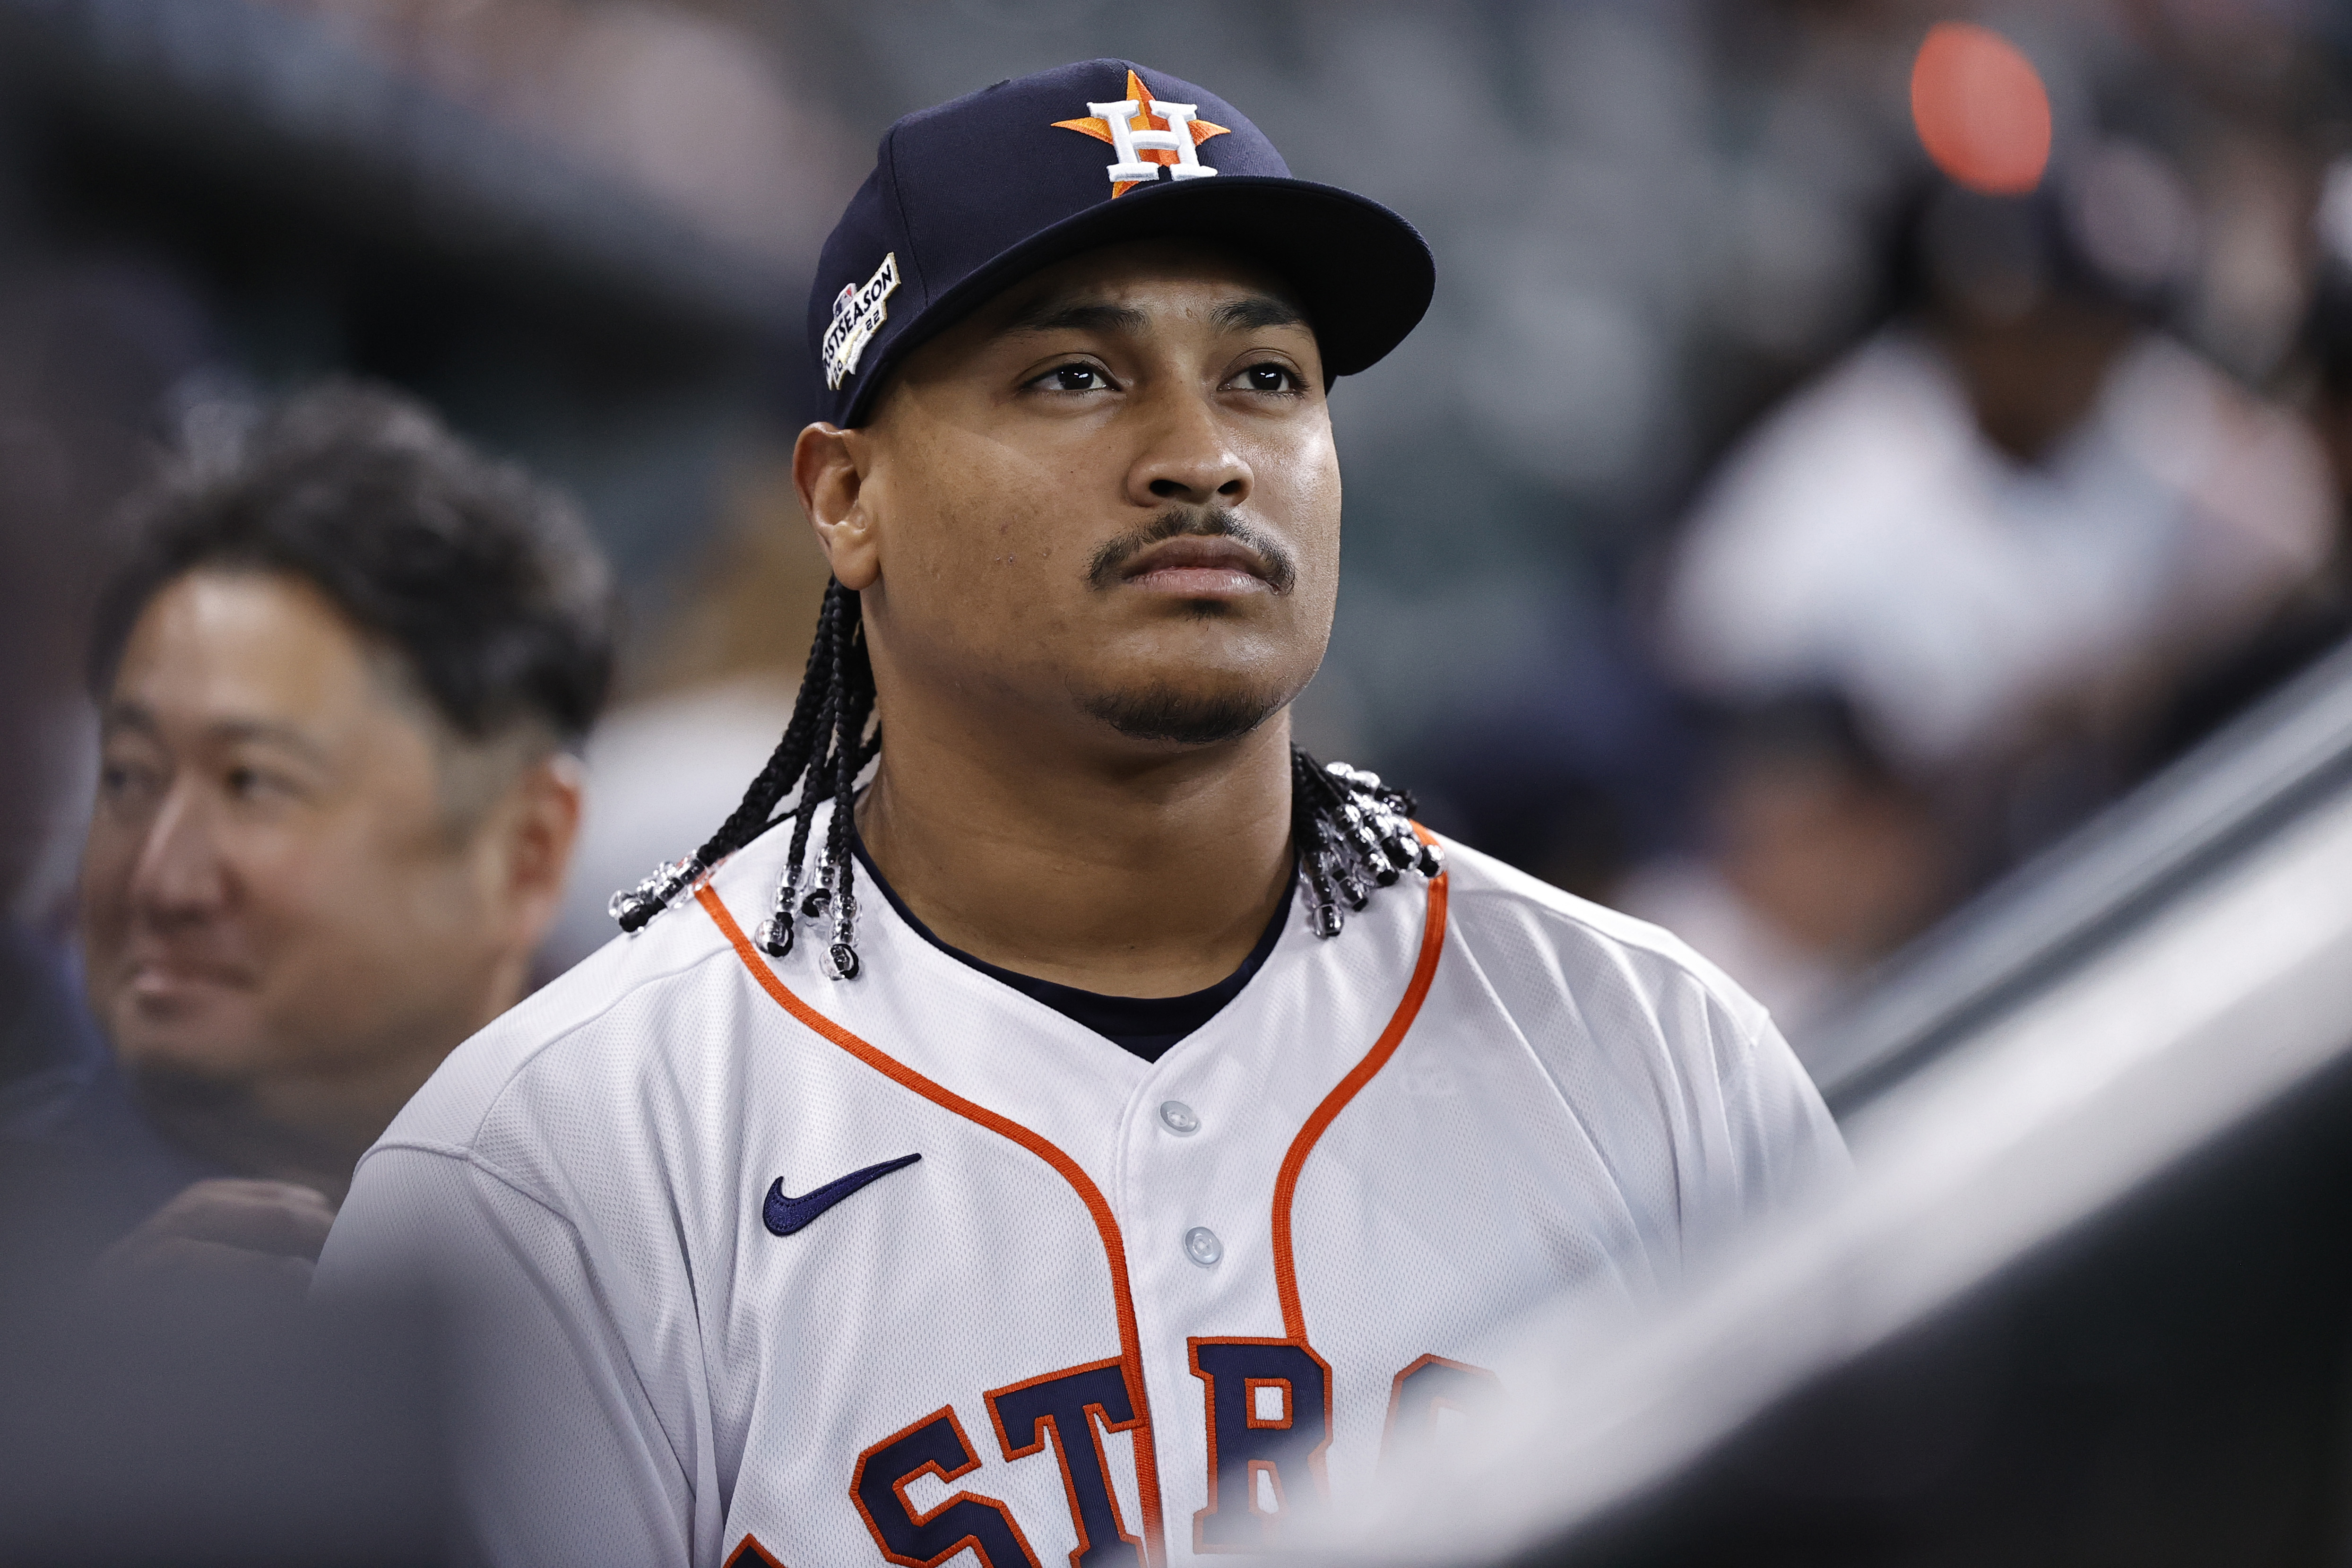 Houston Astros Baseball Stars Rock Hair Extensions – NBC 5